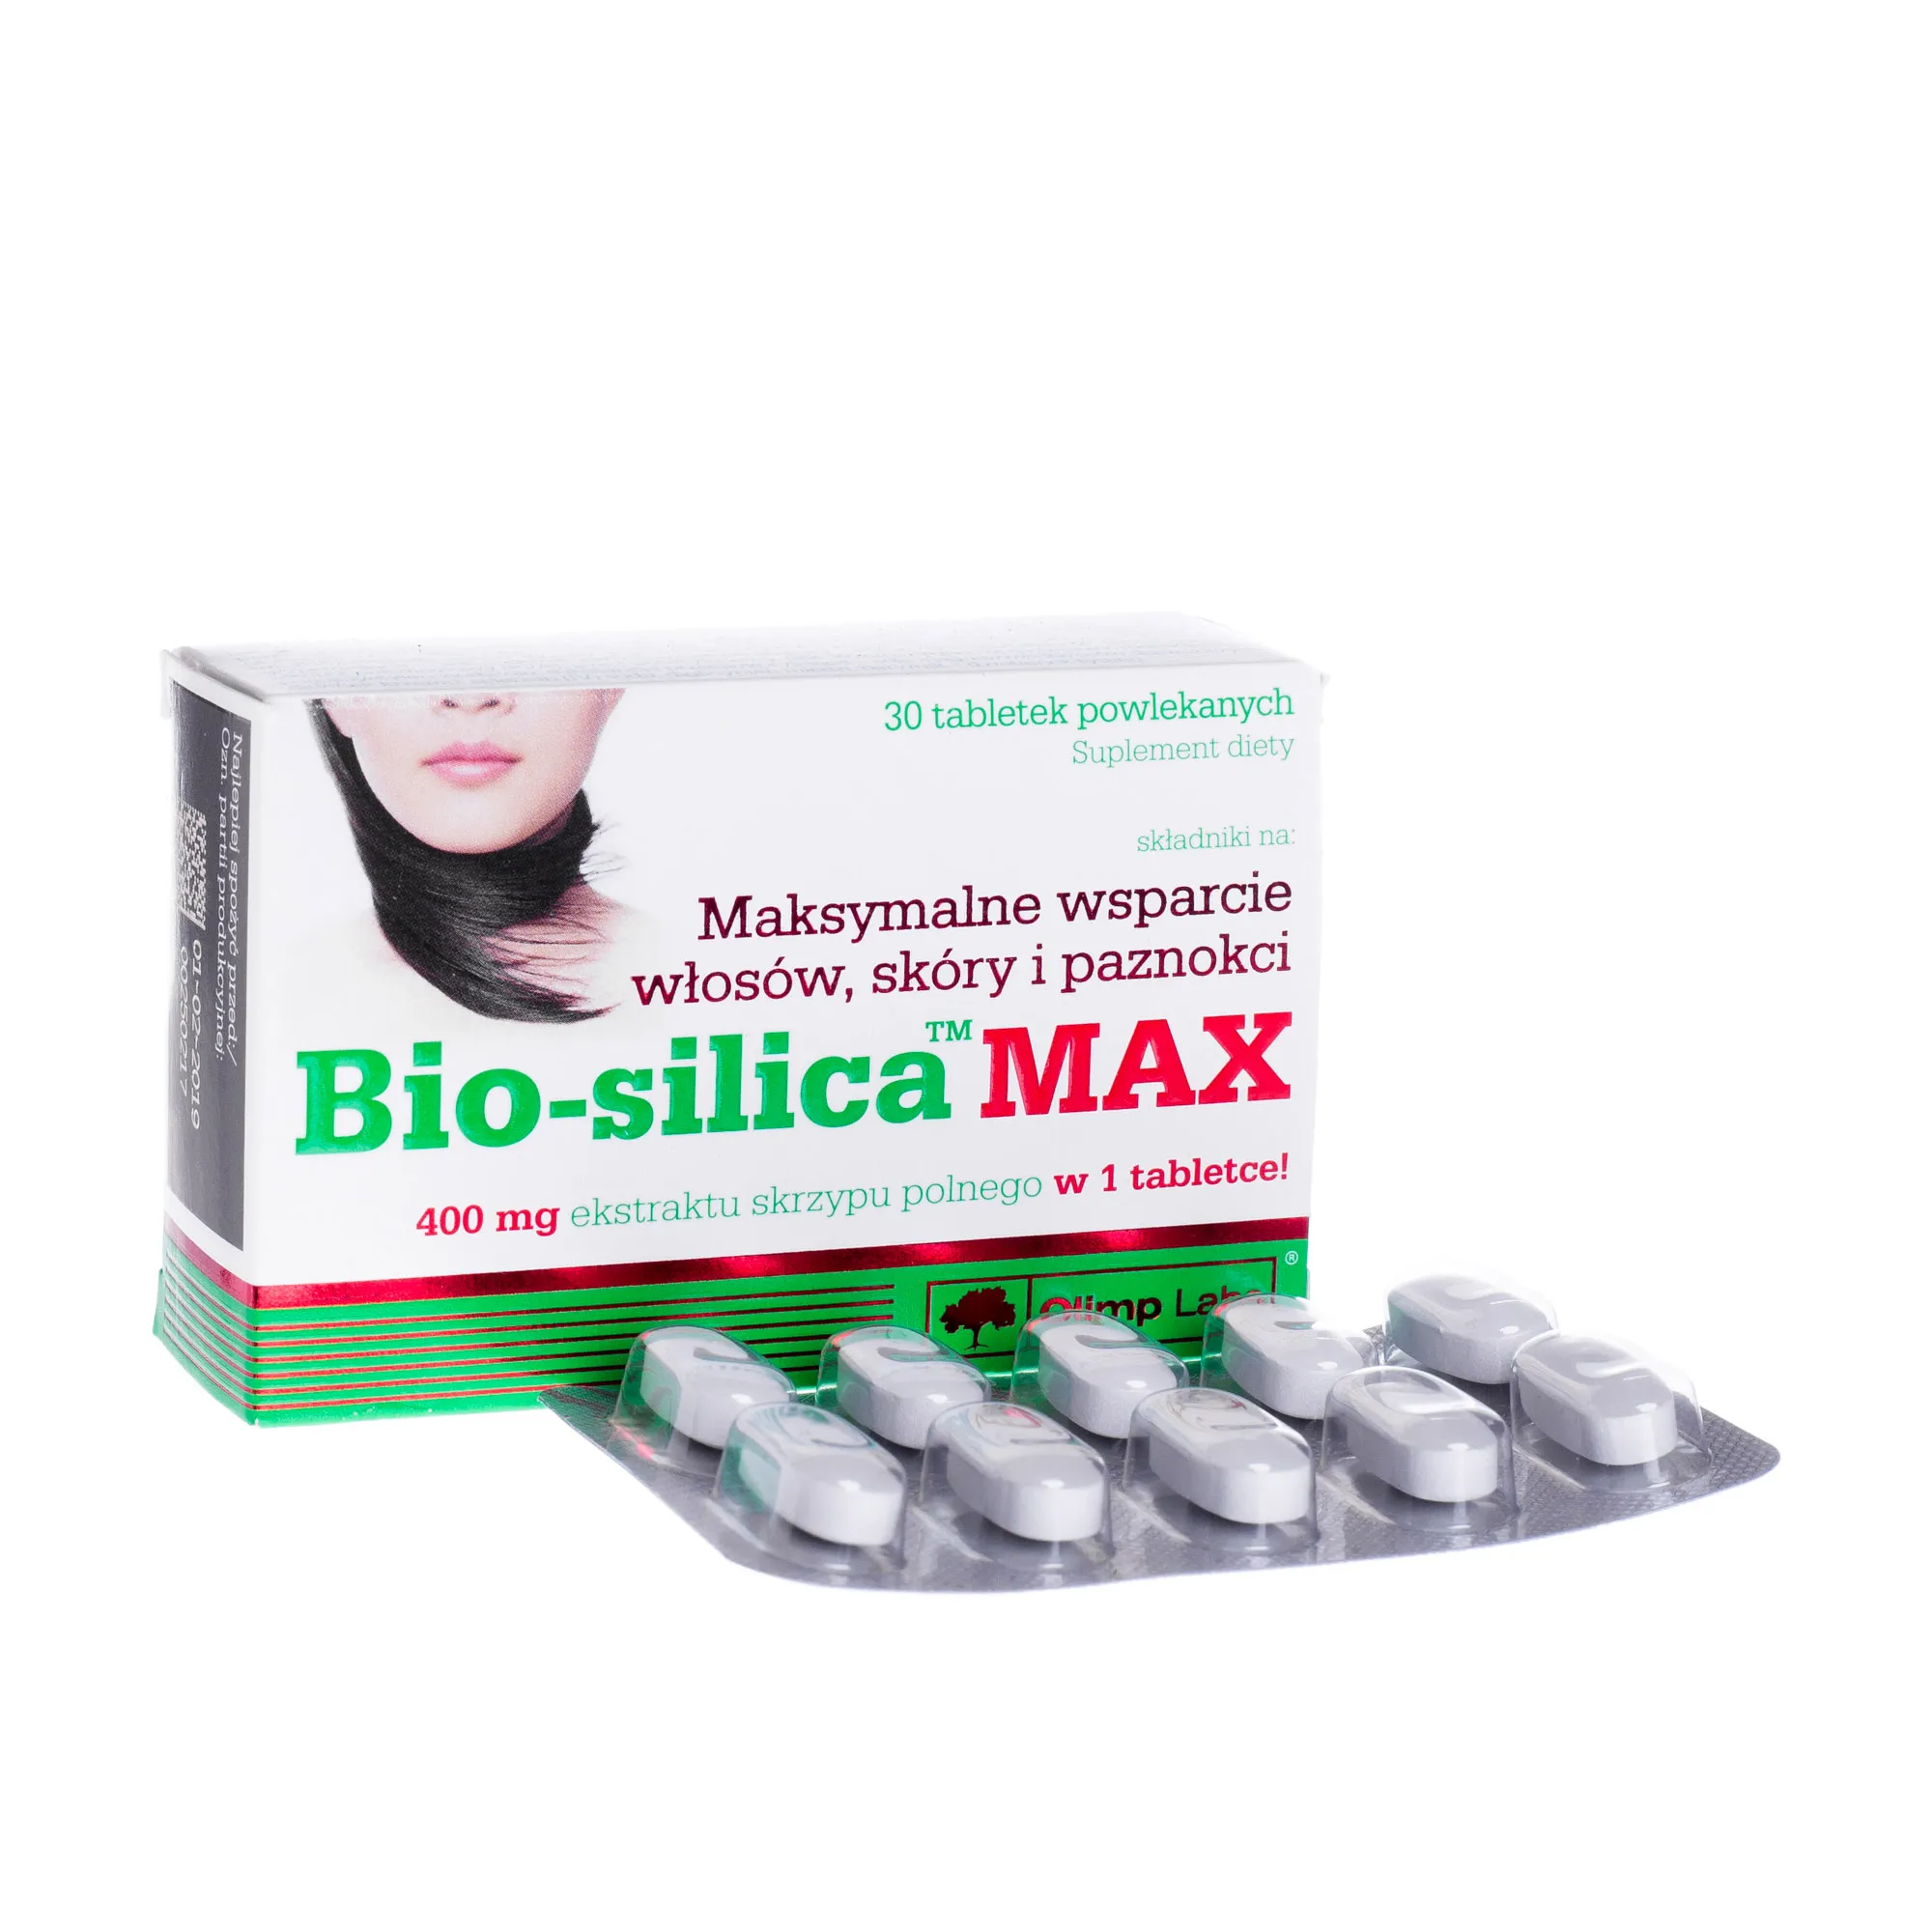 Olimp Bio-Silica Max, suplement diety, 30 tabletek powlekanych 